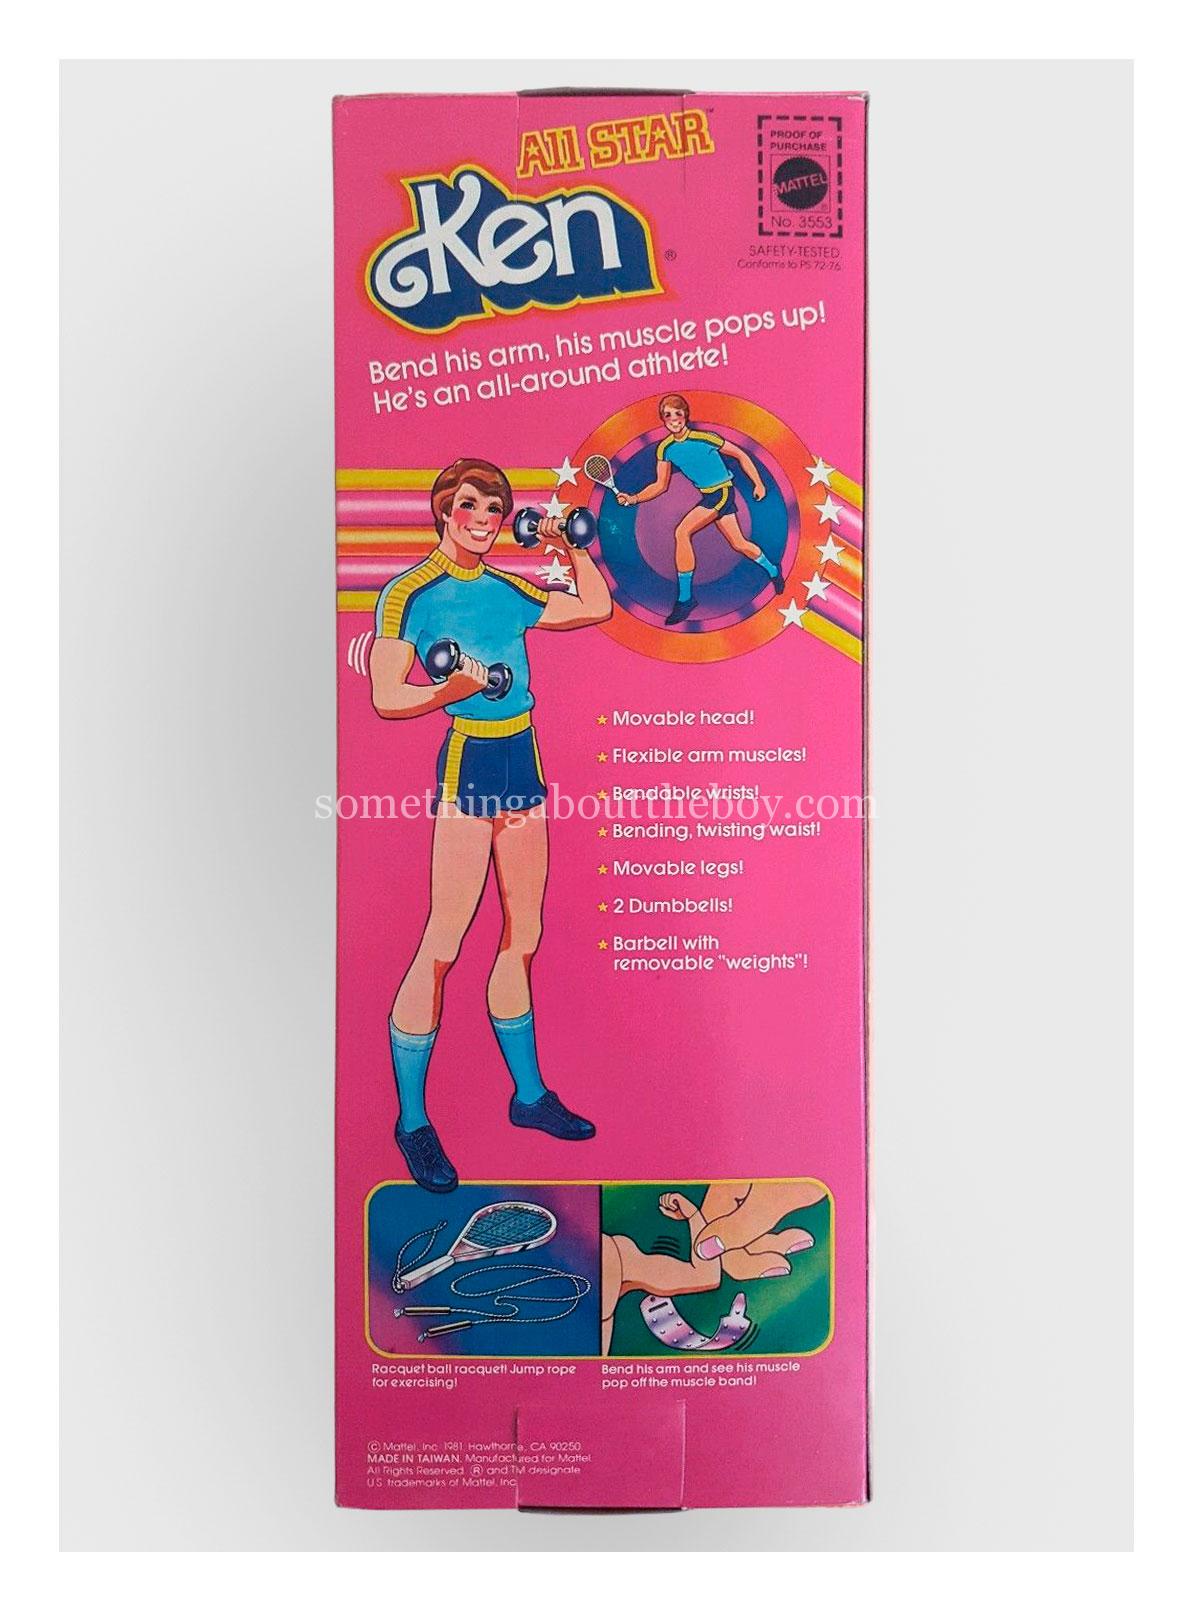 1982 #3553 All Star Ken original packaging